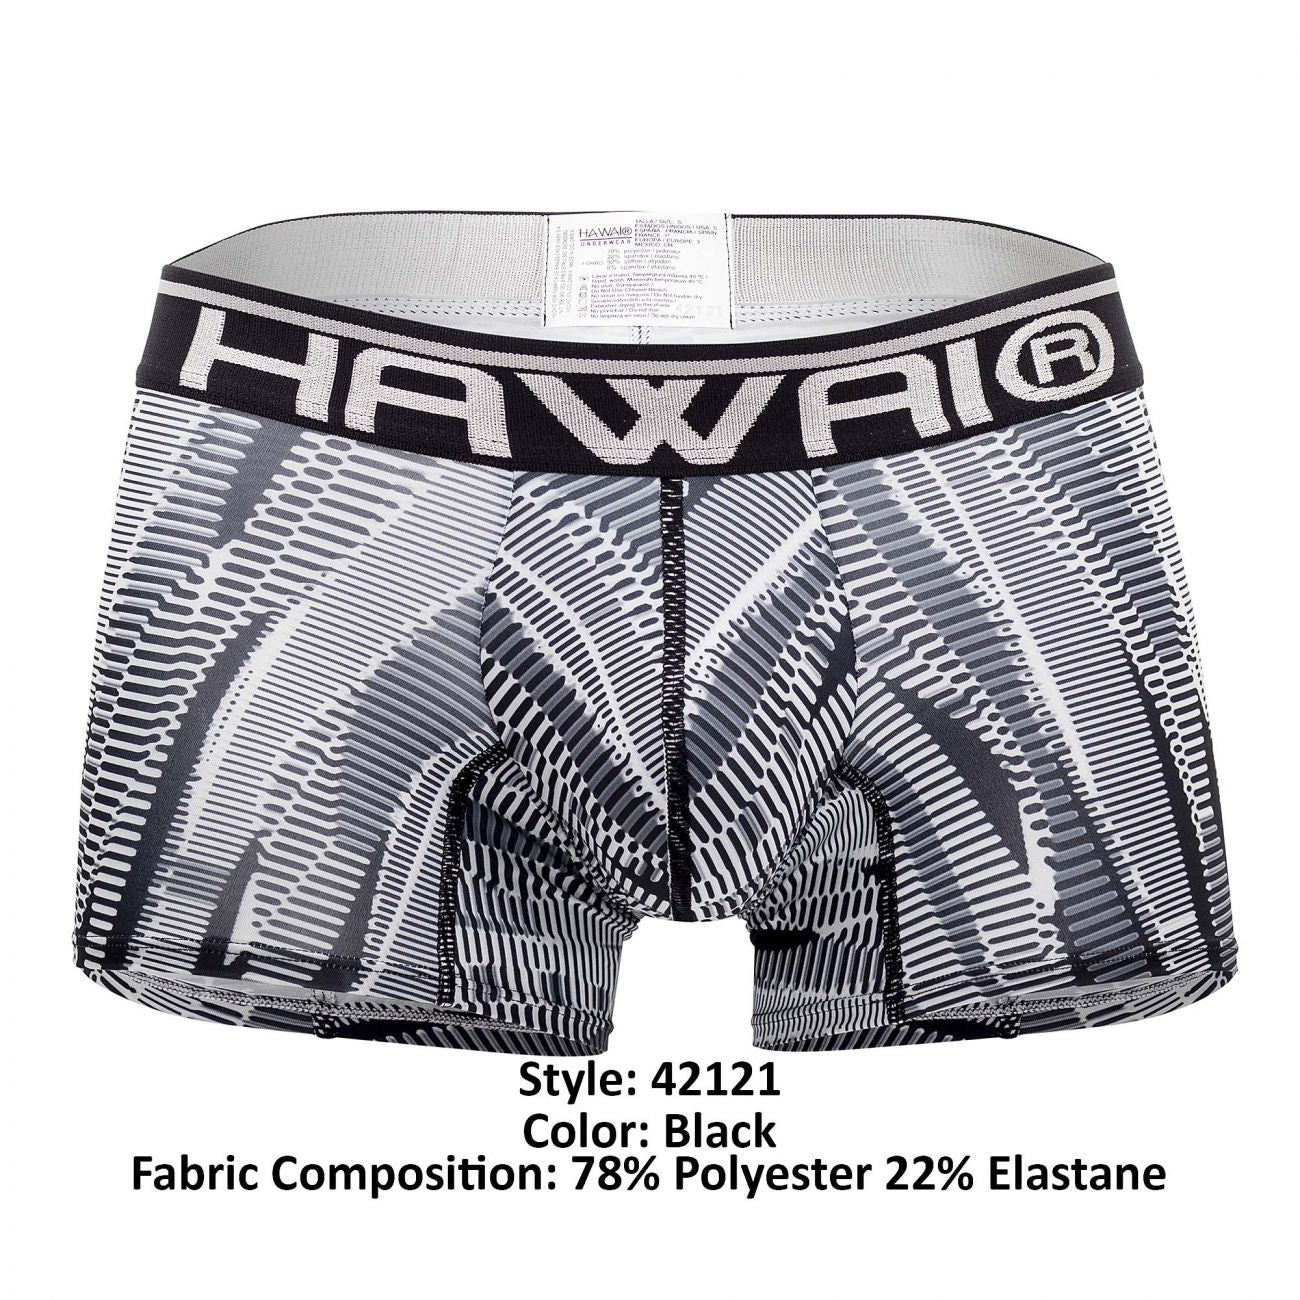 HAWAI 42121 Printed Athletic Trunks Black